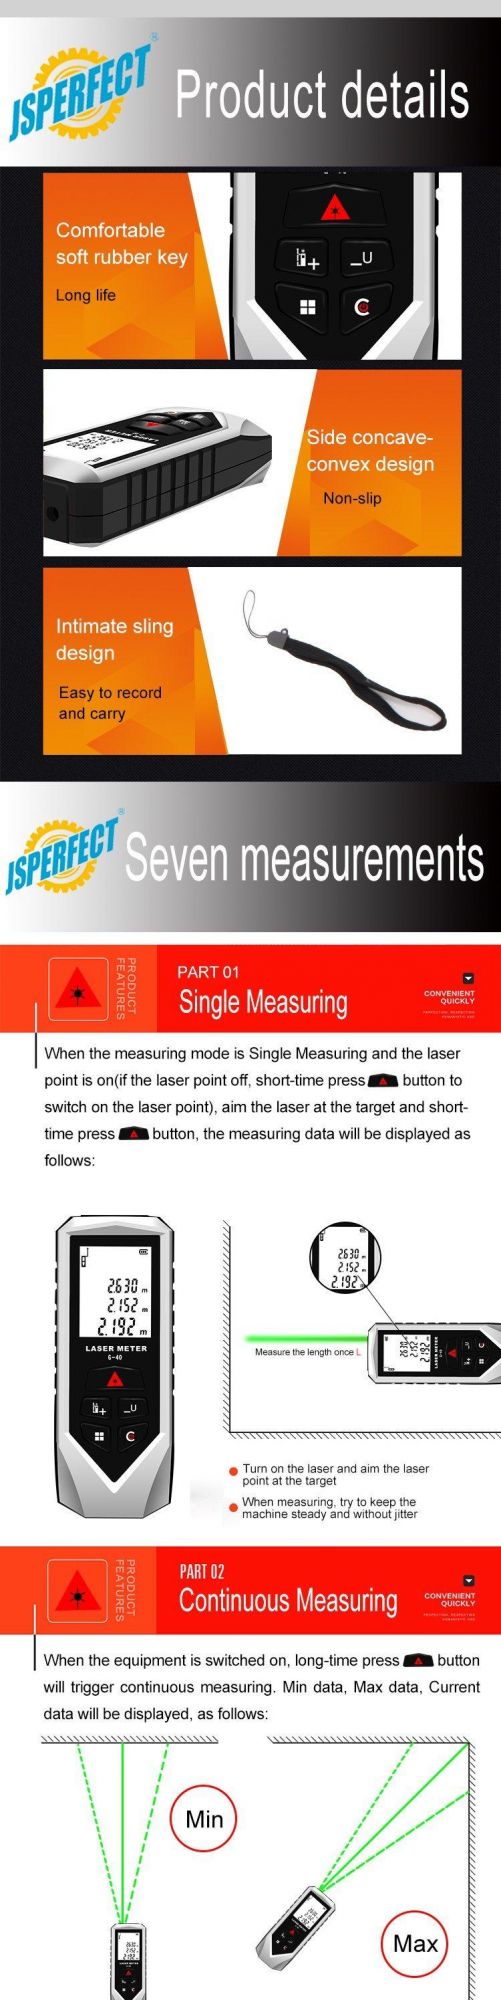 Area Volume Distance Laser Distance Meter Measure Vertical Measure